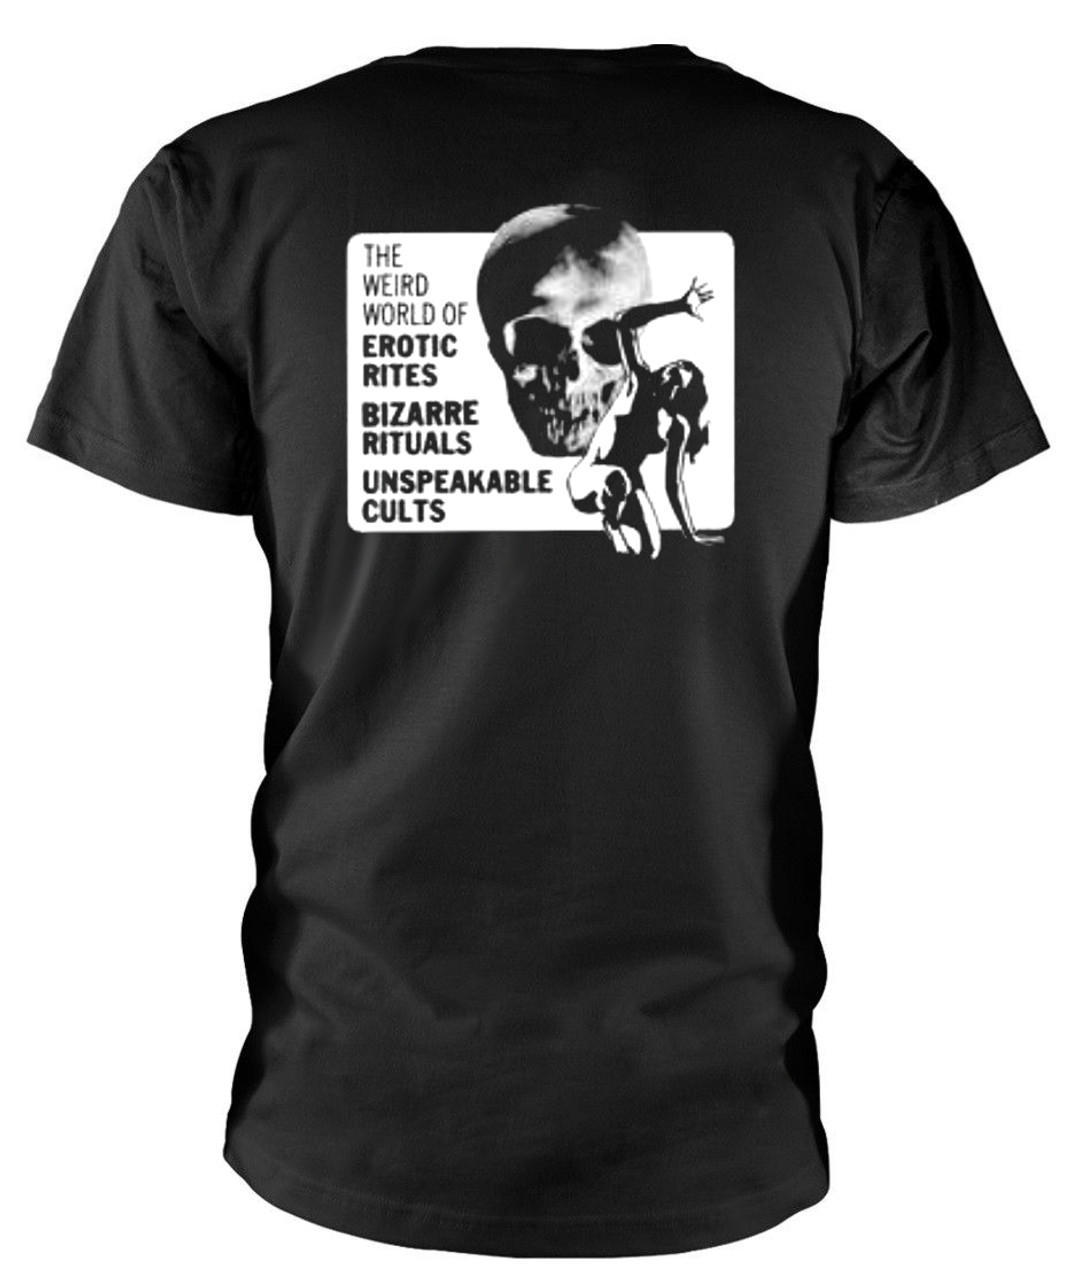 Electric Wizard 'Come My Fanatics' (Black) T-Shirt